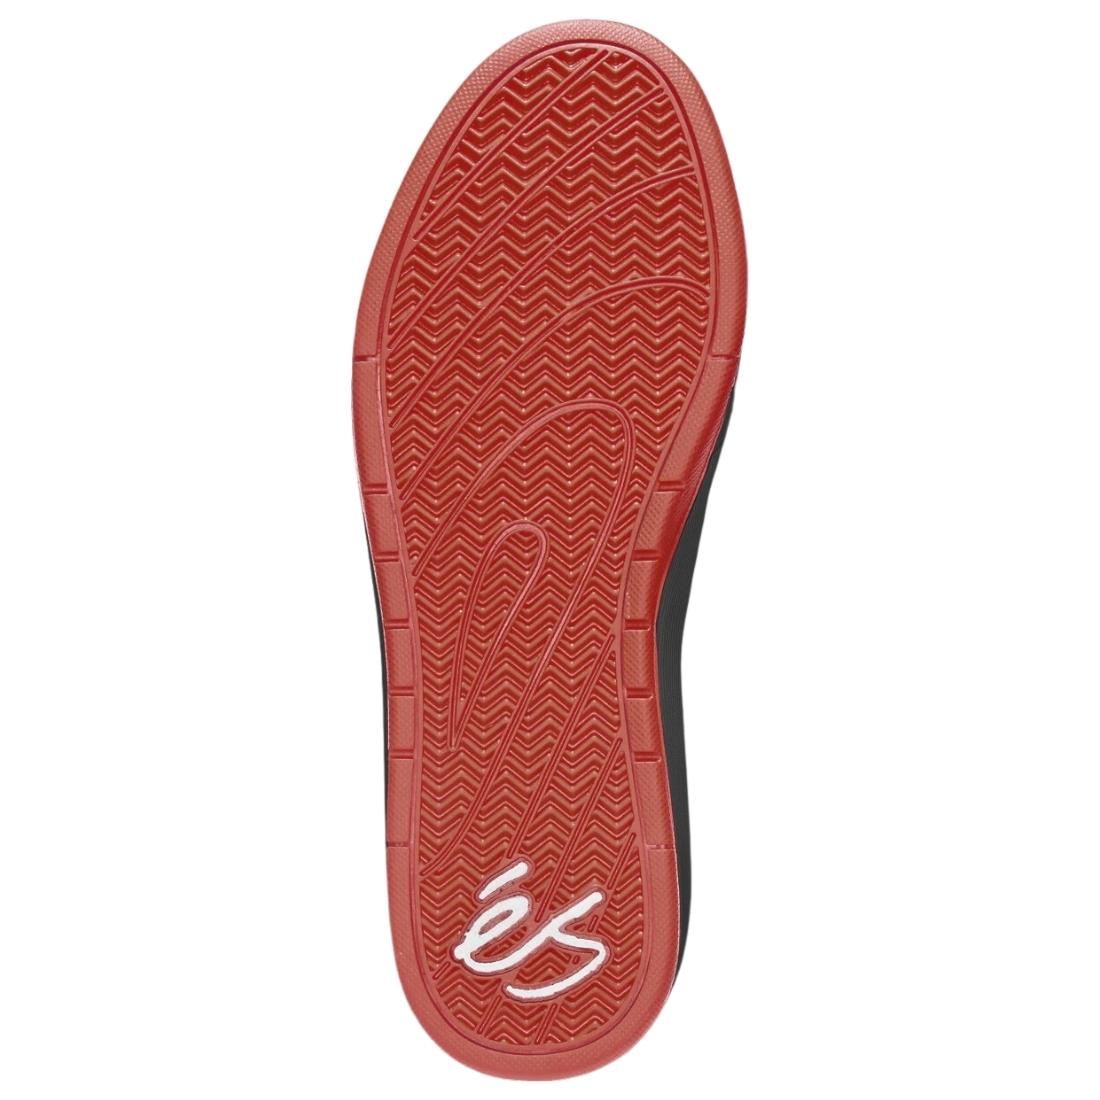 Es Stylus Mid X Wade Desarmo Skate Shoes - Black/Red - Mens Skate Shoes by eS